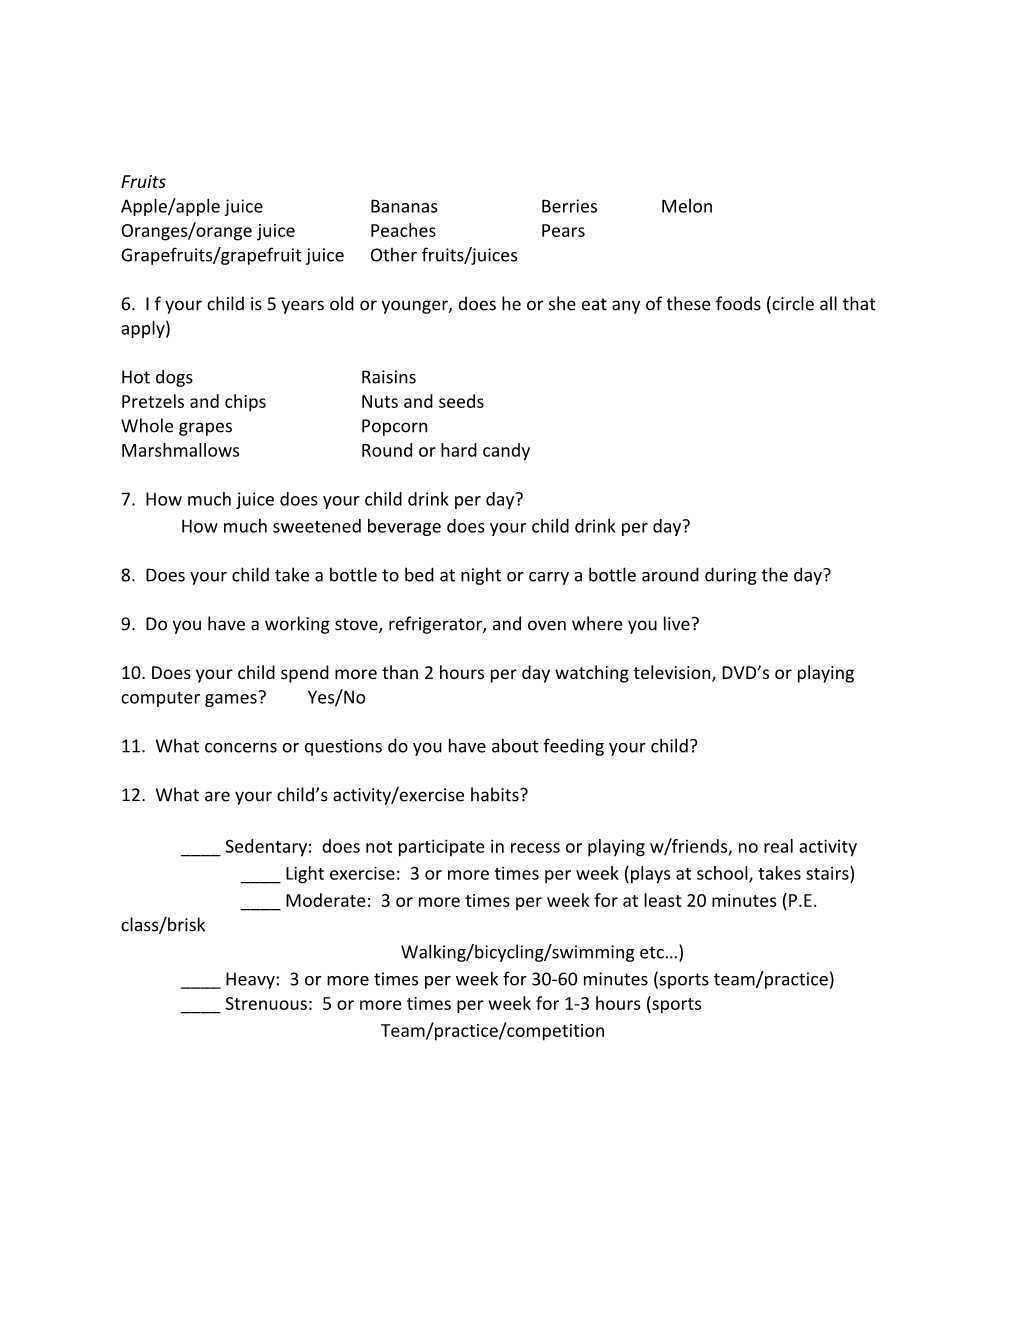 Pediatric Nutrition Questionnaire